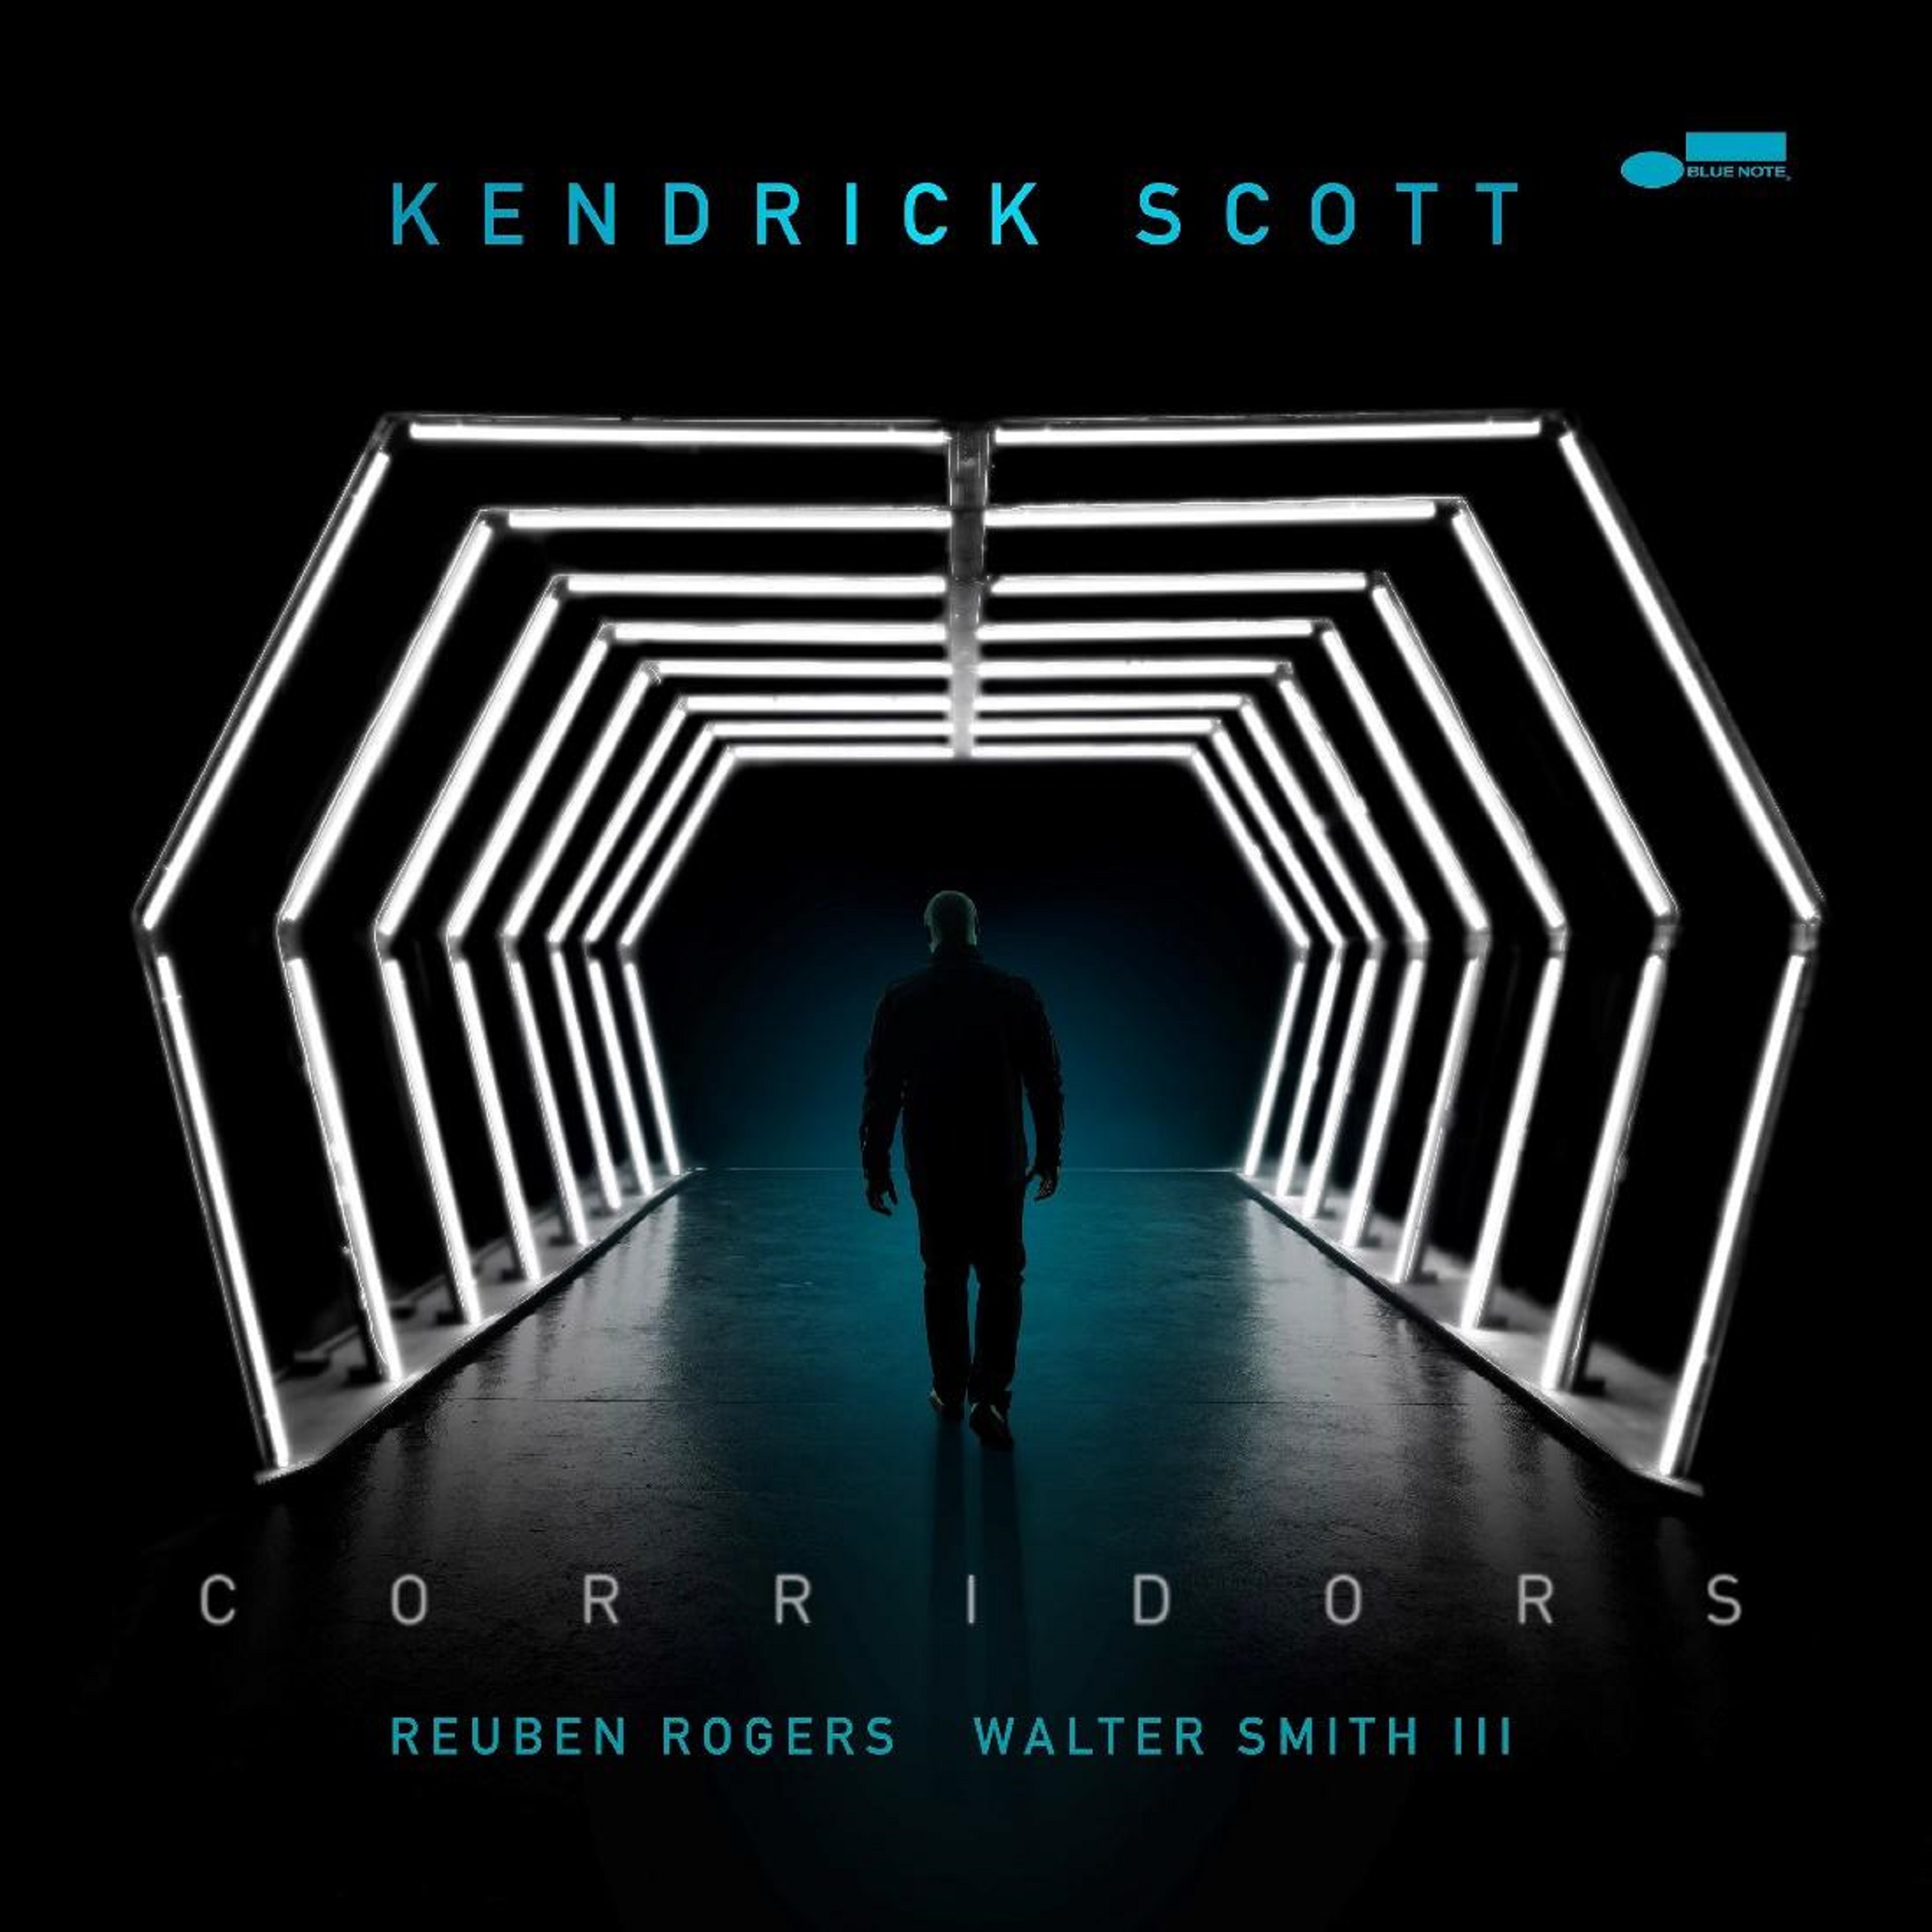 Kendrick Scott Returns with March 3 Release of Stunning New Trio Album Corridors Featuring Walter Smith III & Reuben Rogers